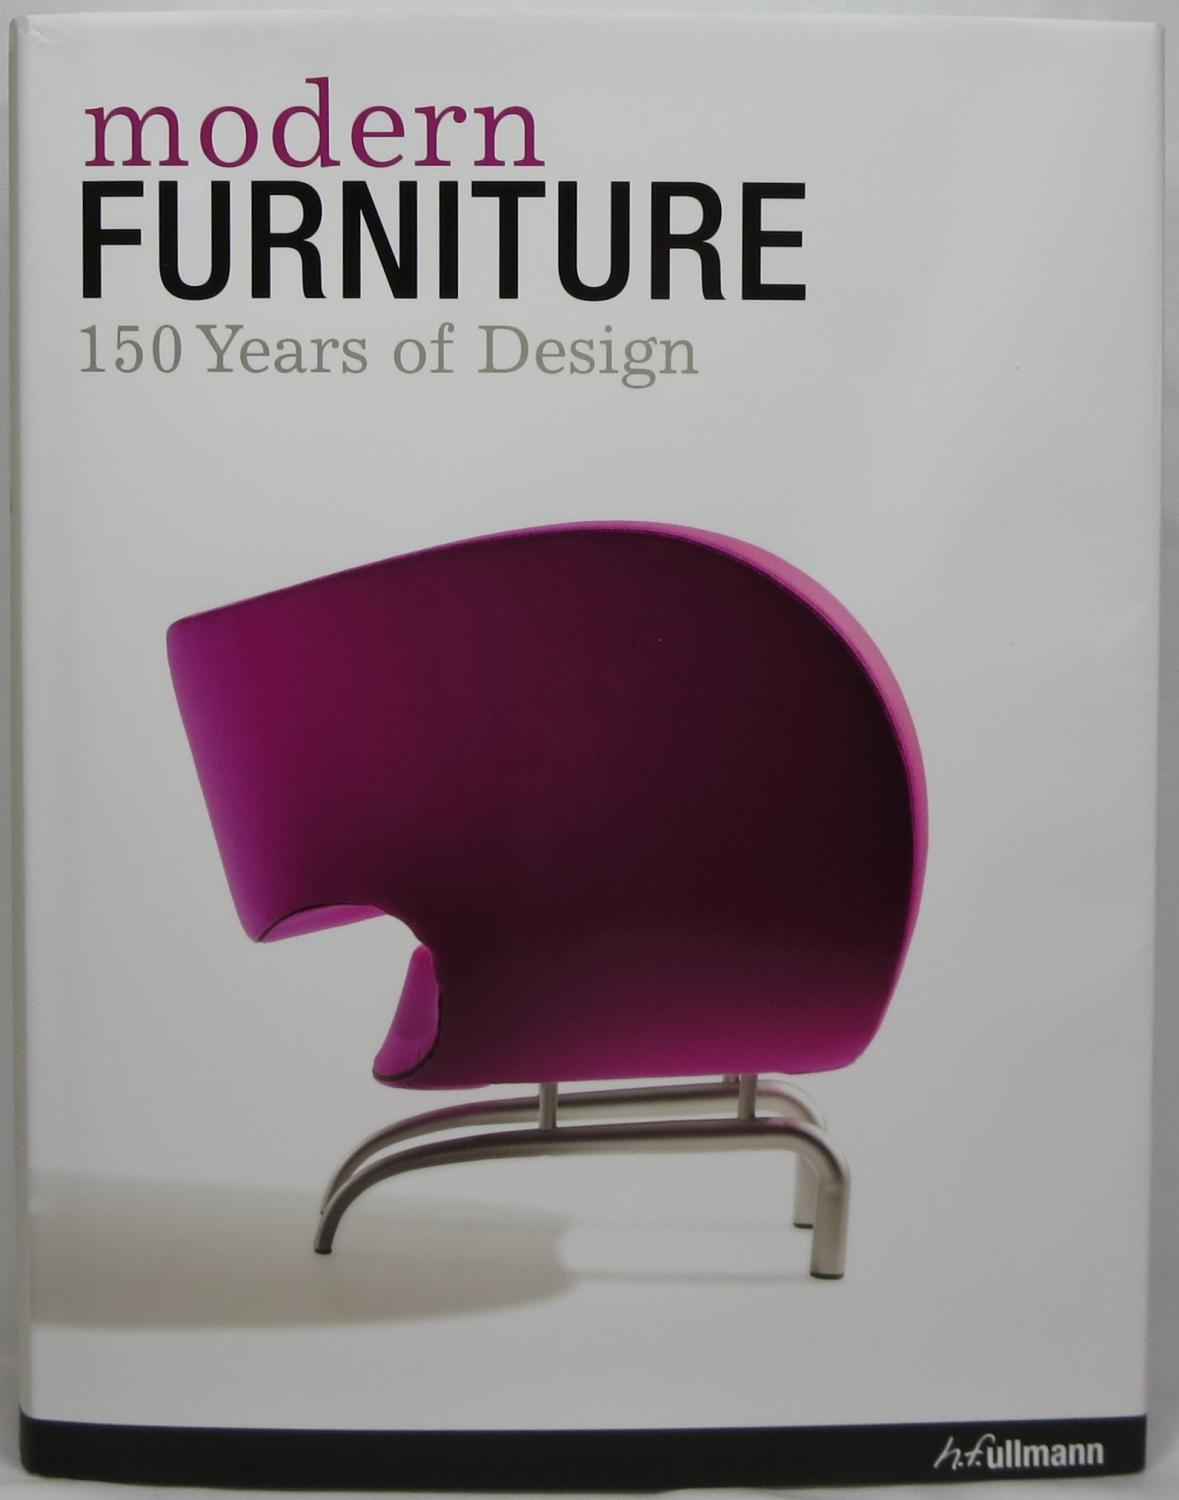 modern furniture: 150 years of design